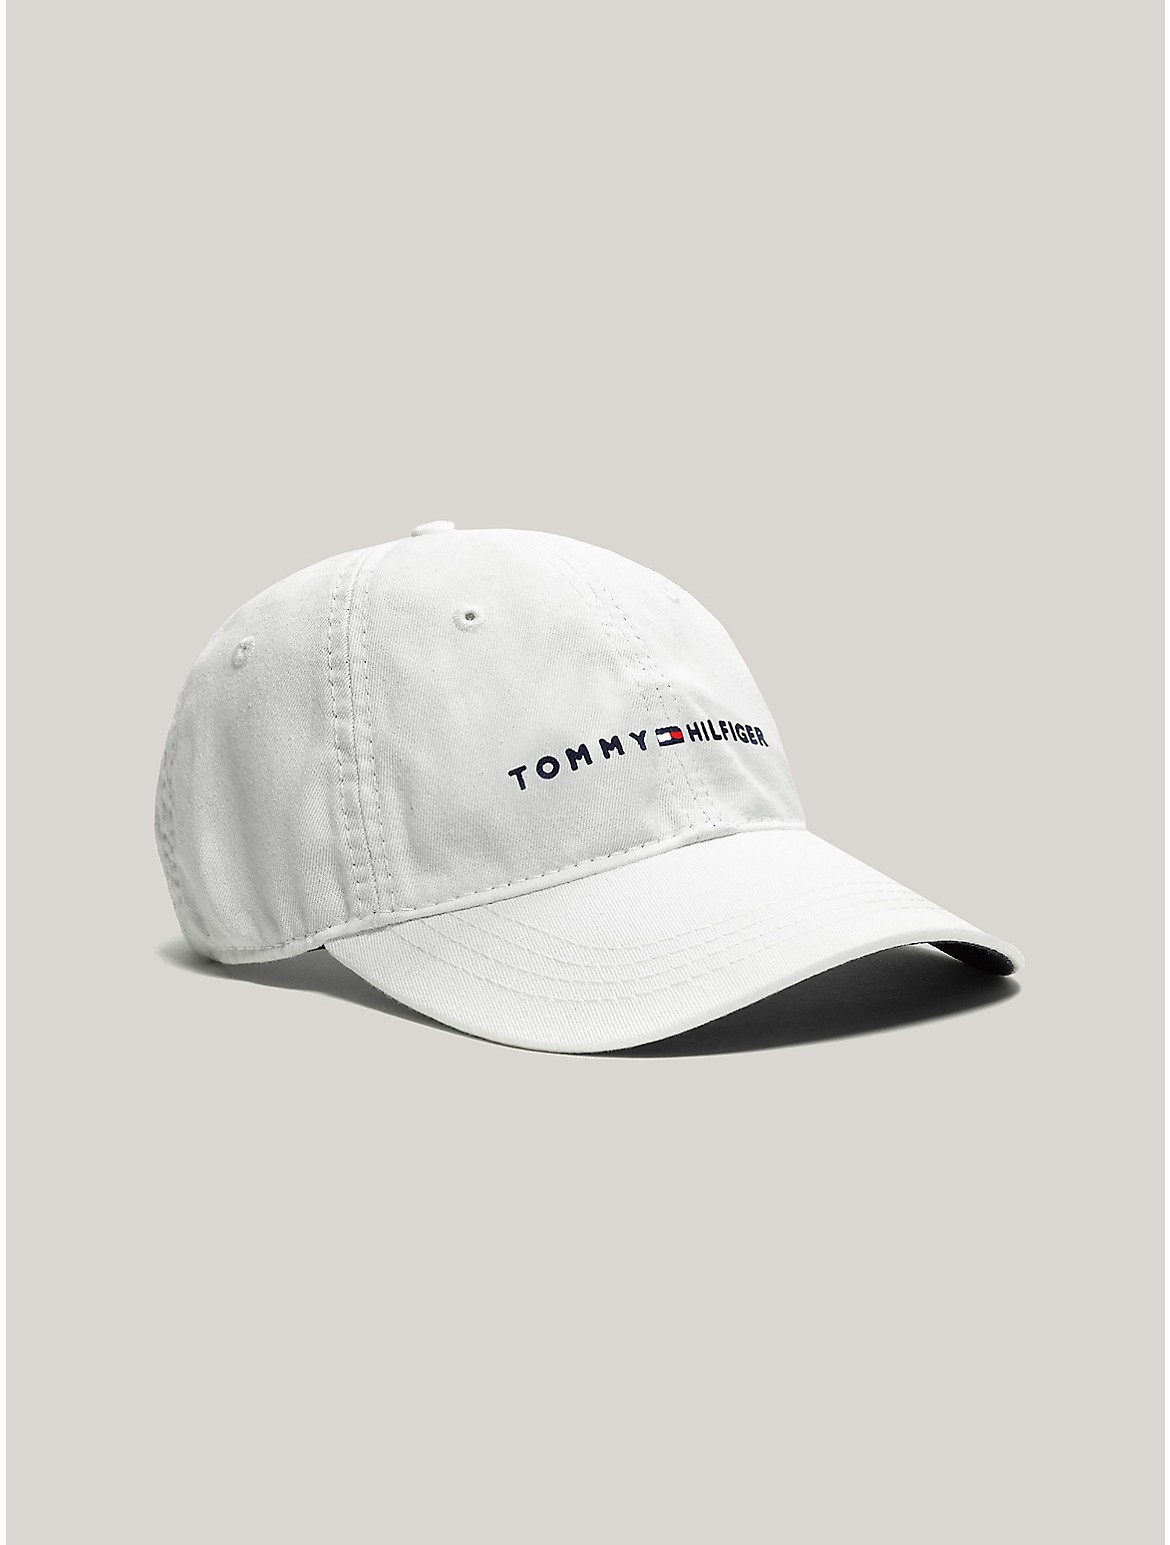 Tommy Hilfiger Men's Embroidered Tommy Logo Baseball Cap - White